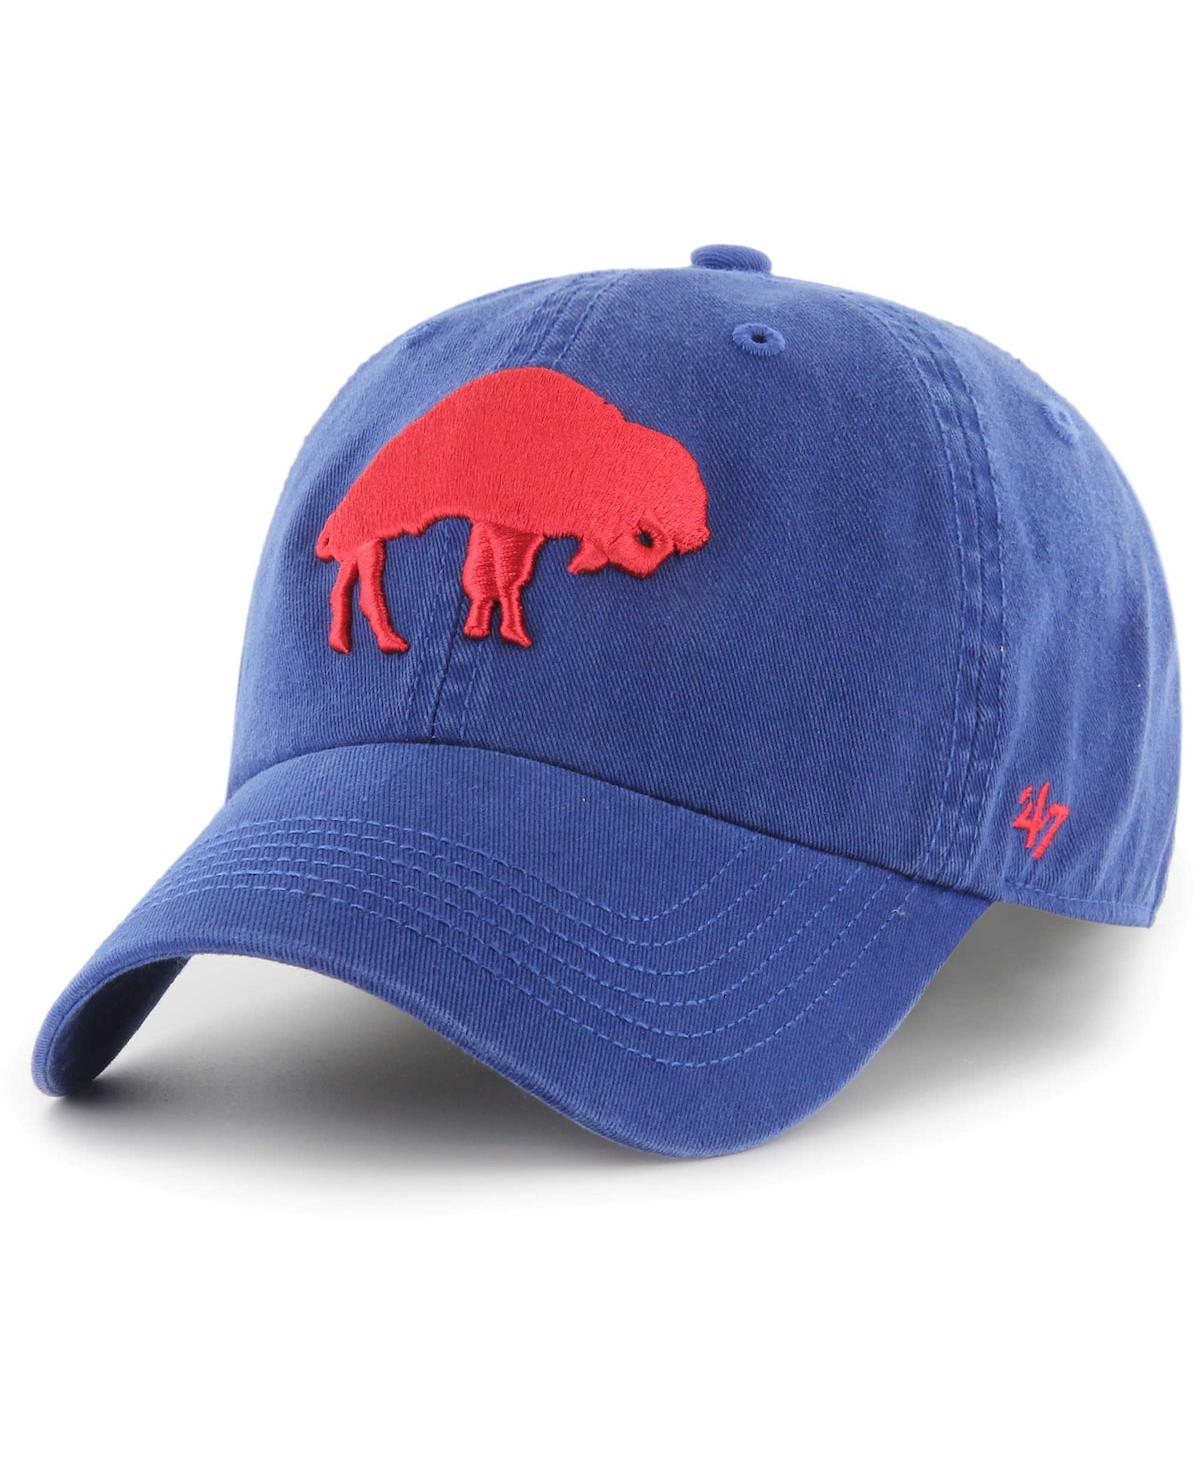 Men's '47 Brand Royal Buffalo Bills Gridiron Classics Franchise Legacy Fitted Hat - Royal